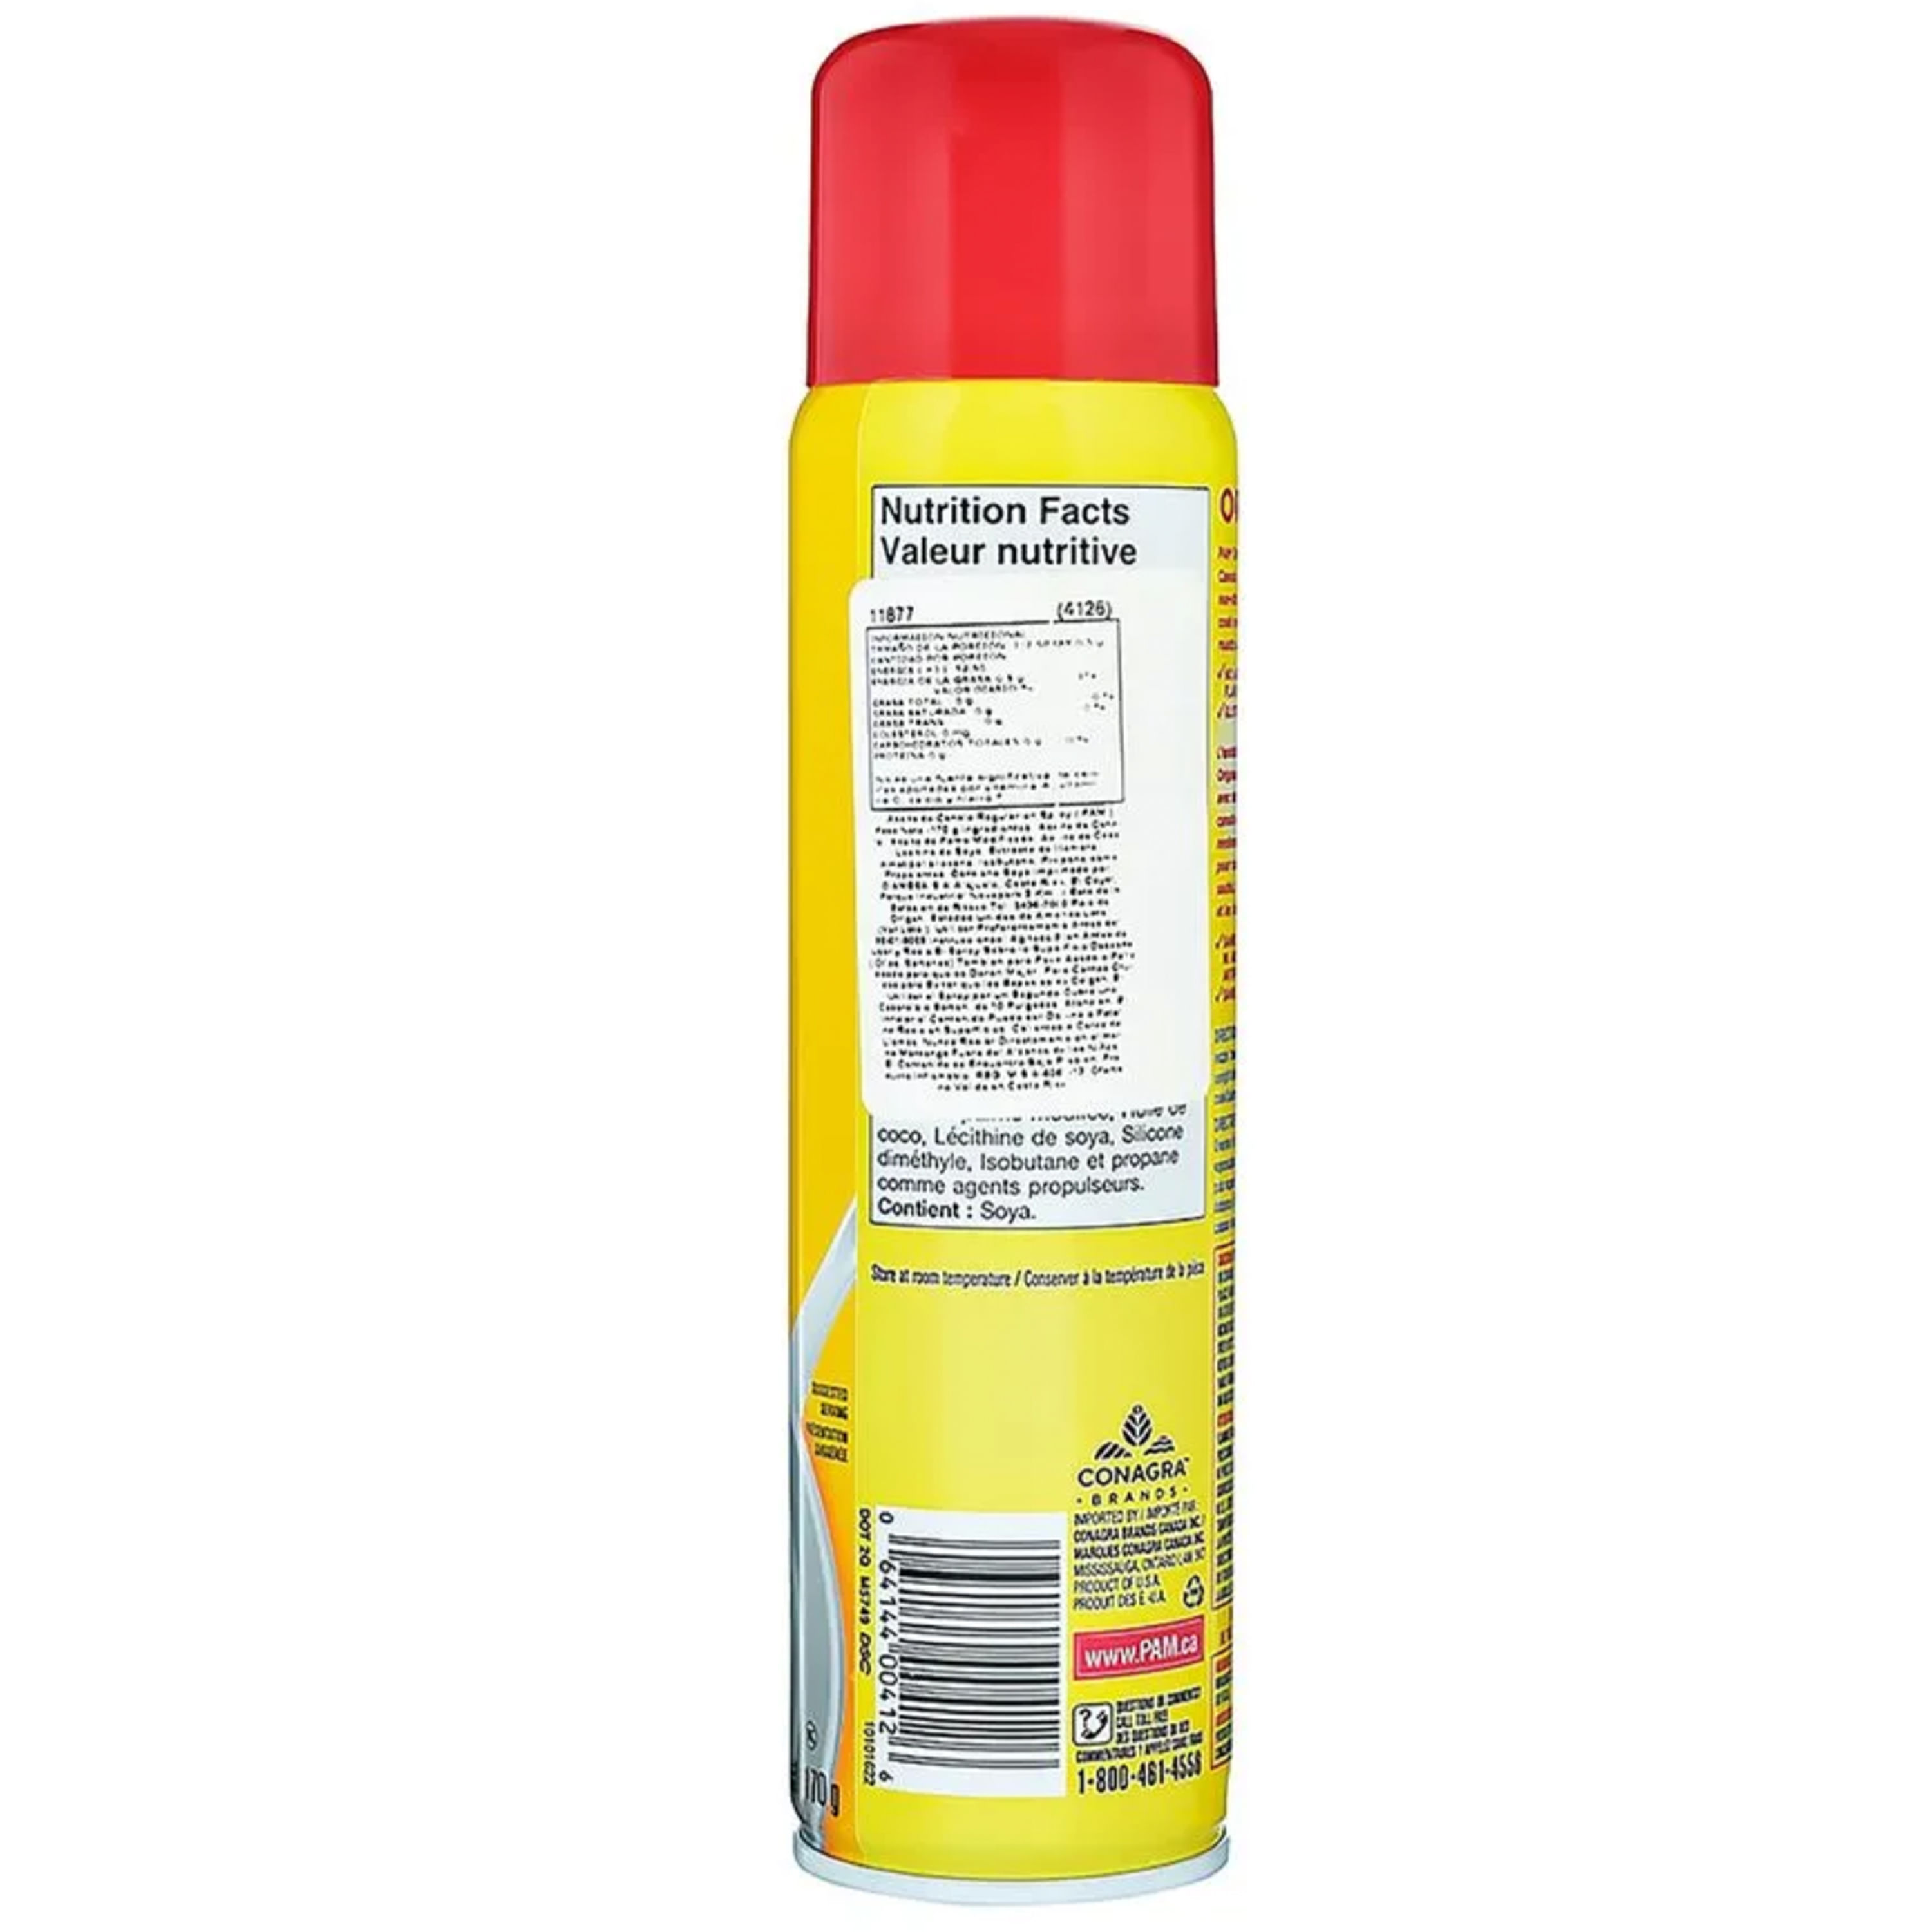 Comprar Aceite Canola Great Value Spray - 227gr